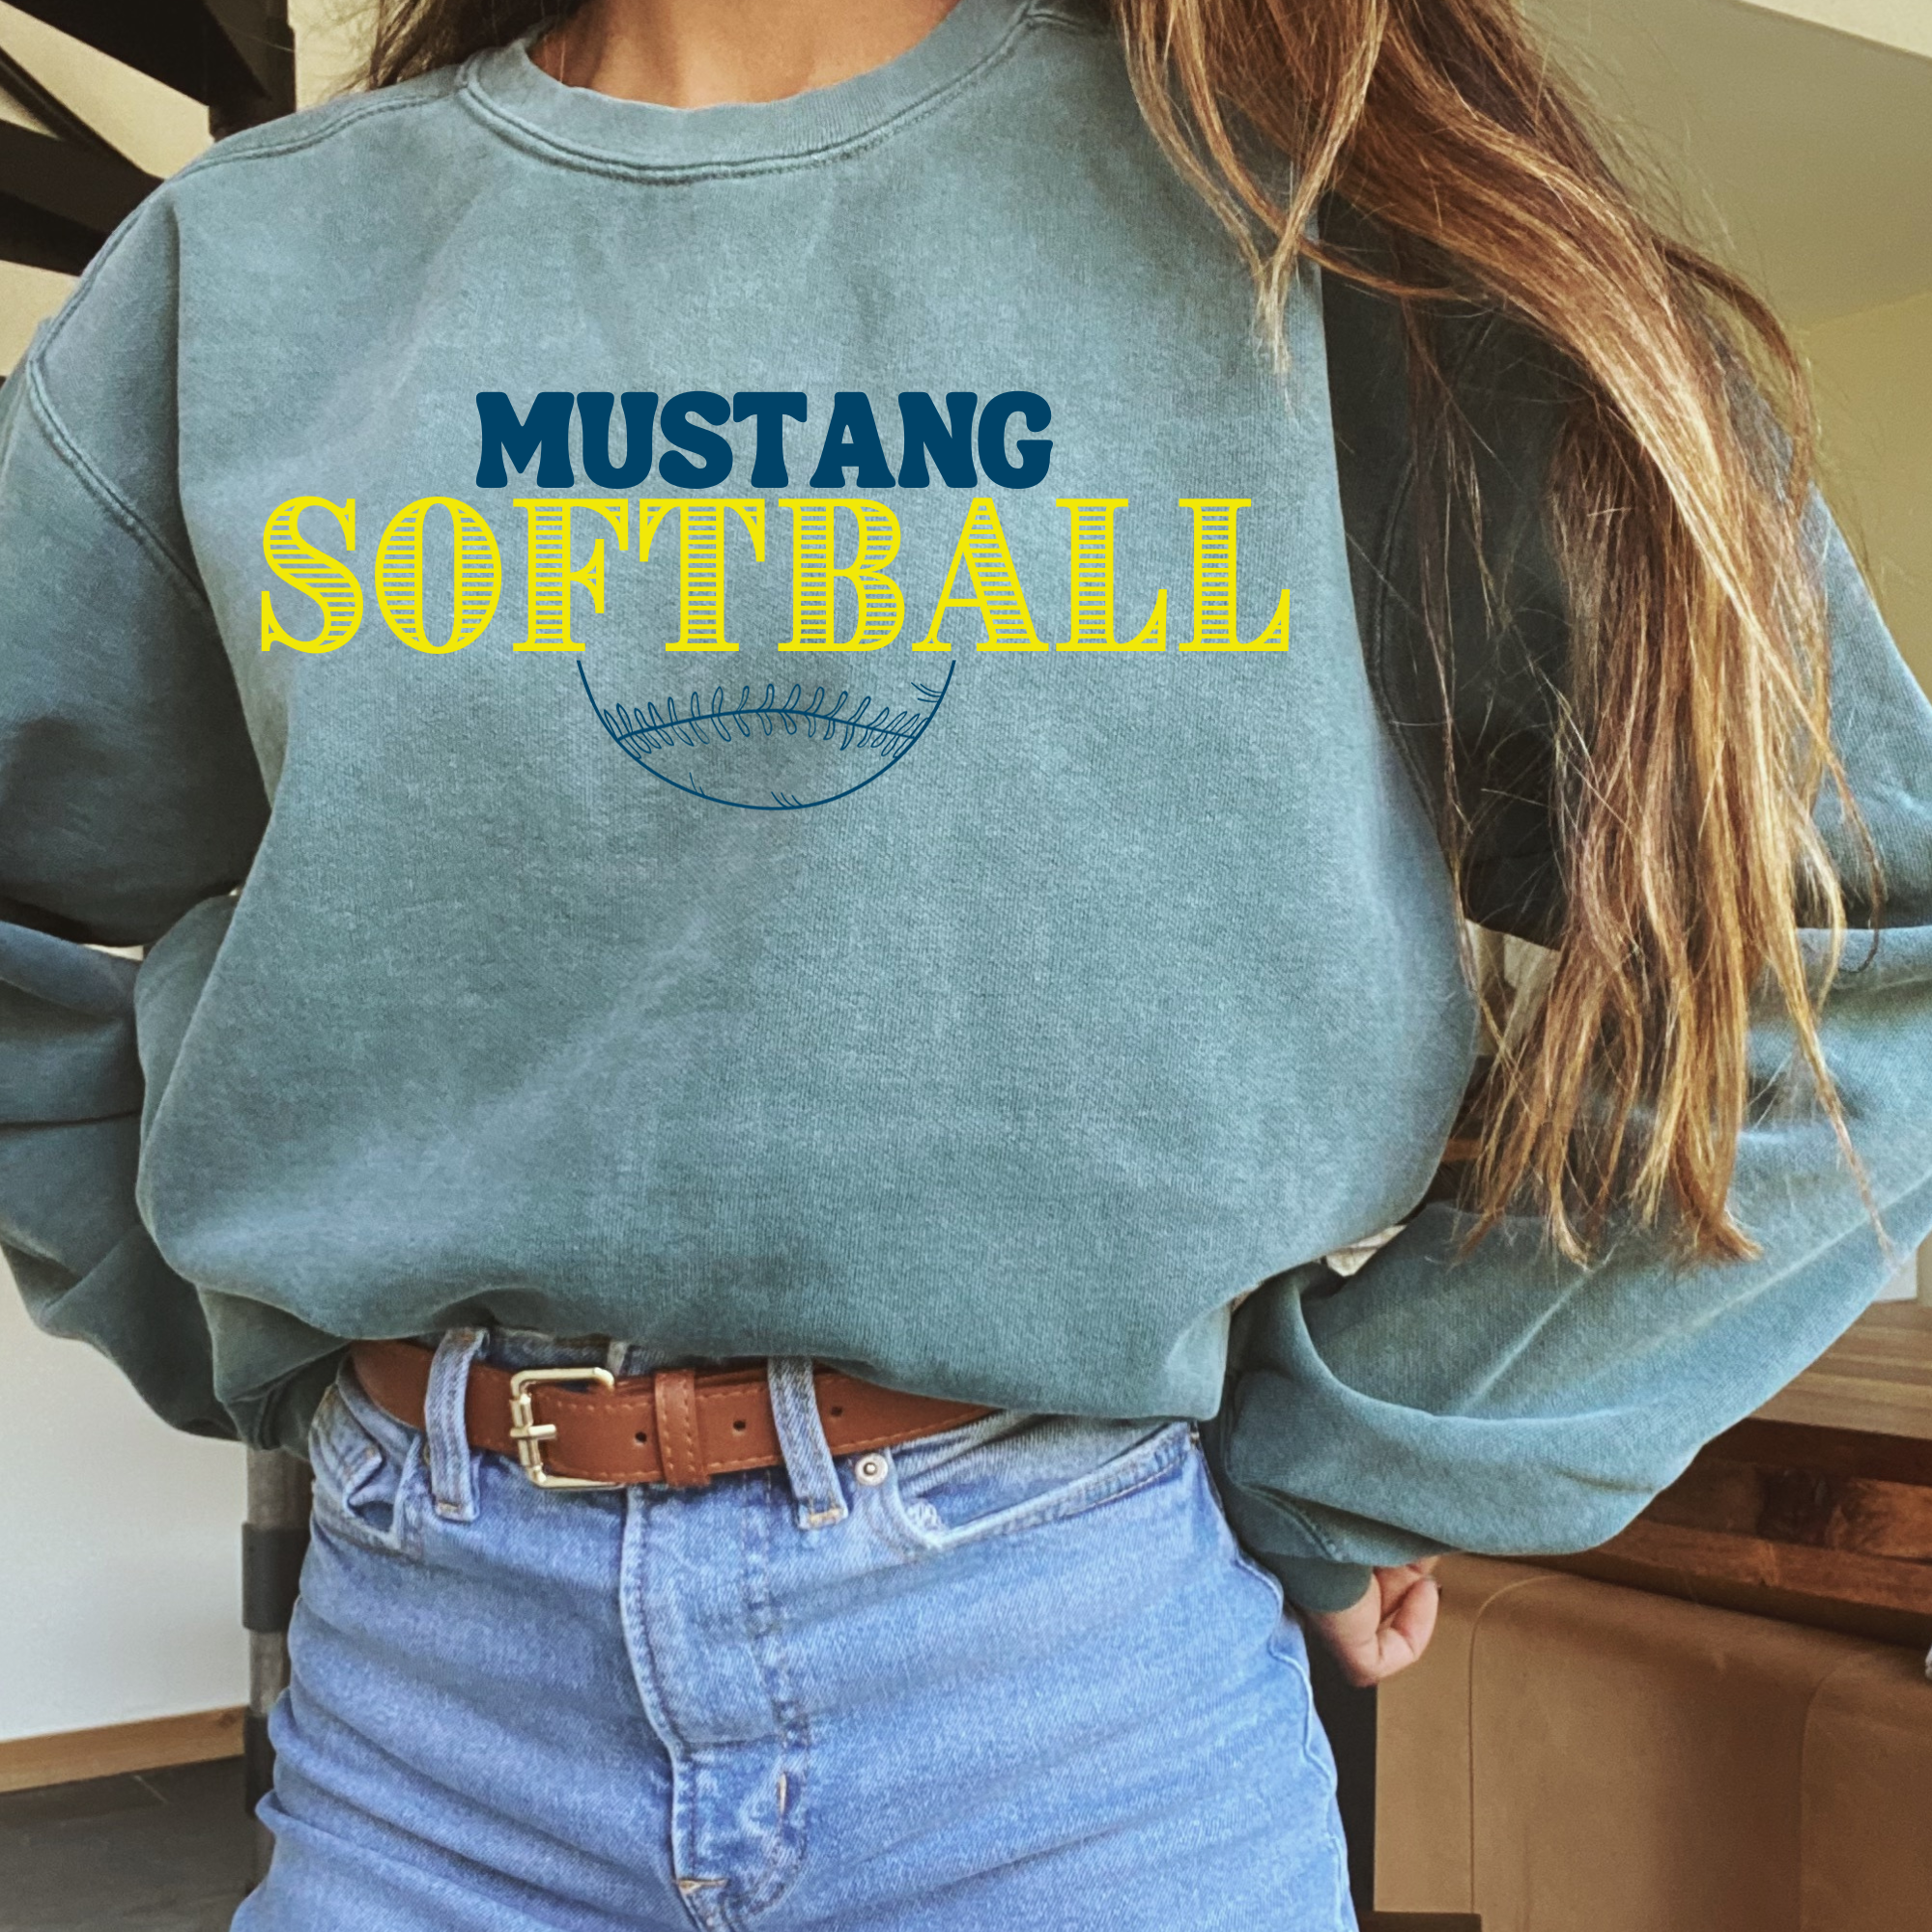 Custom Softball Comfort Color Sweatshirt